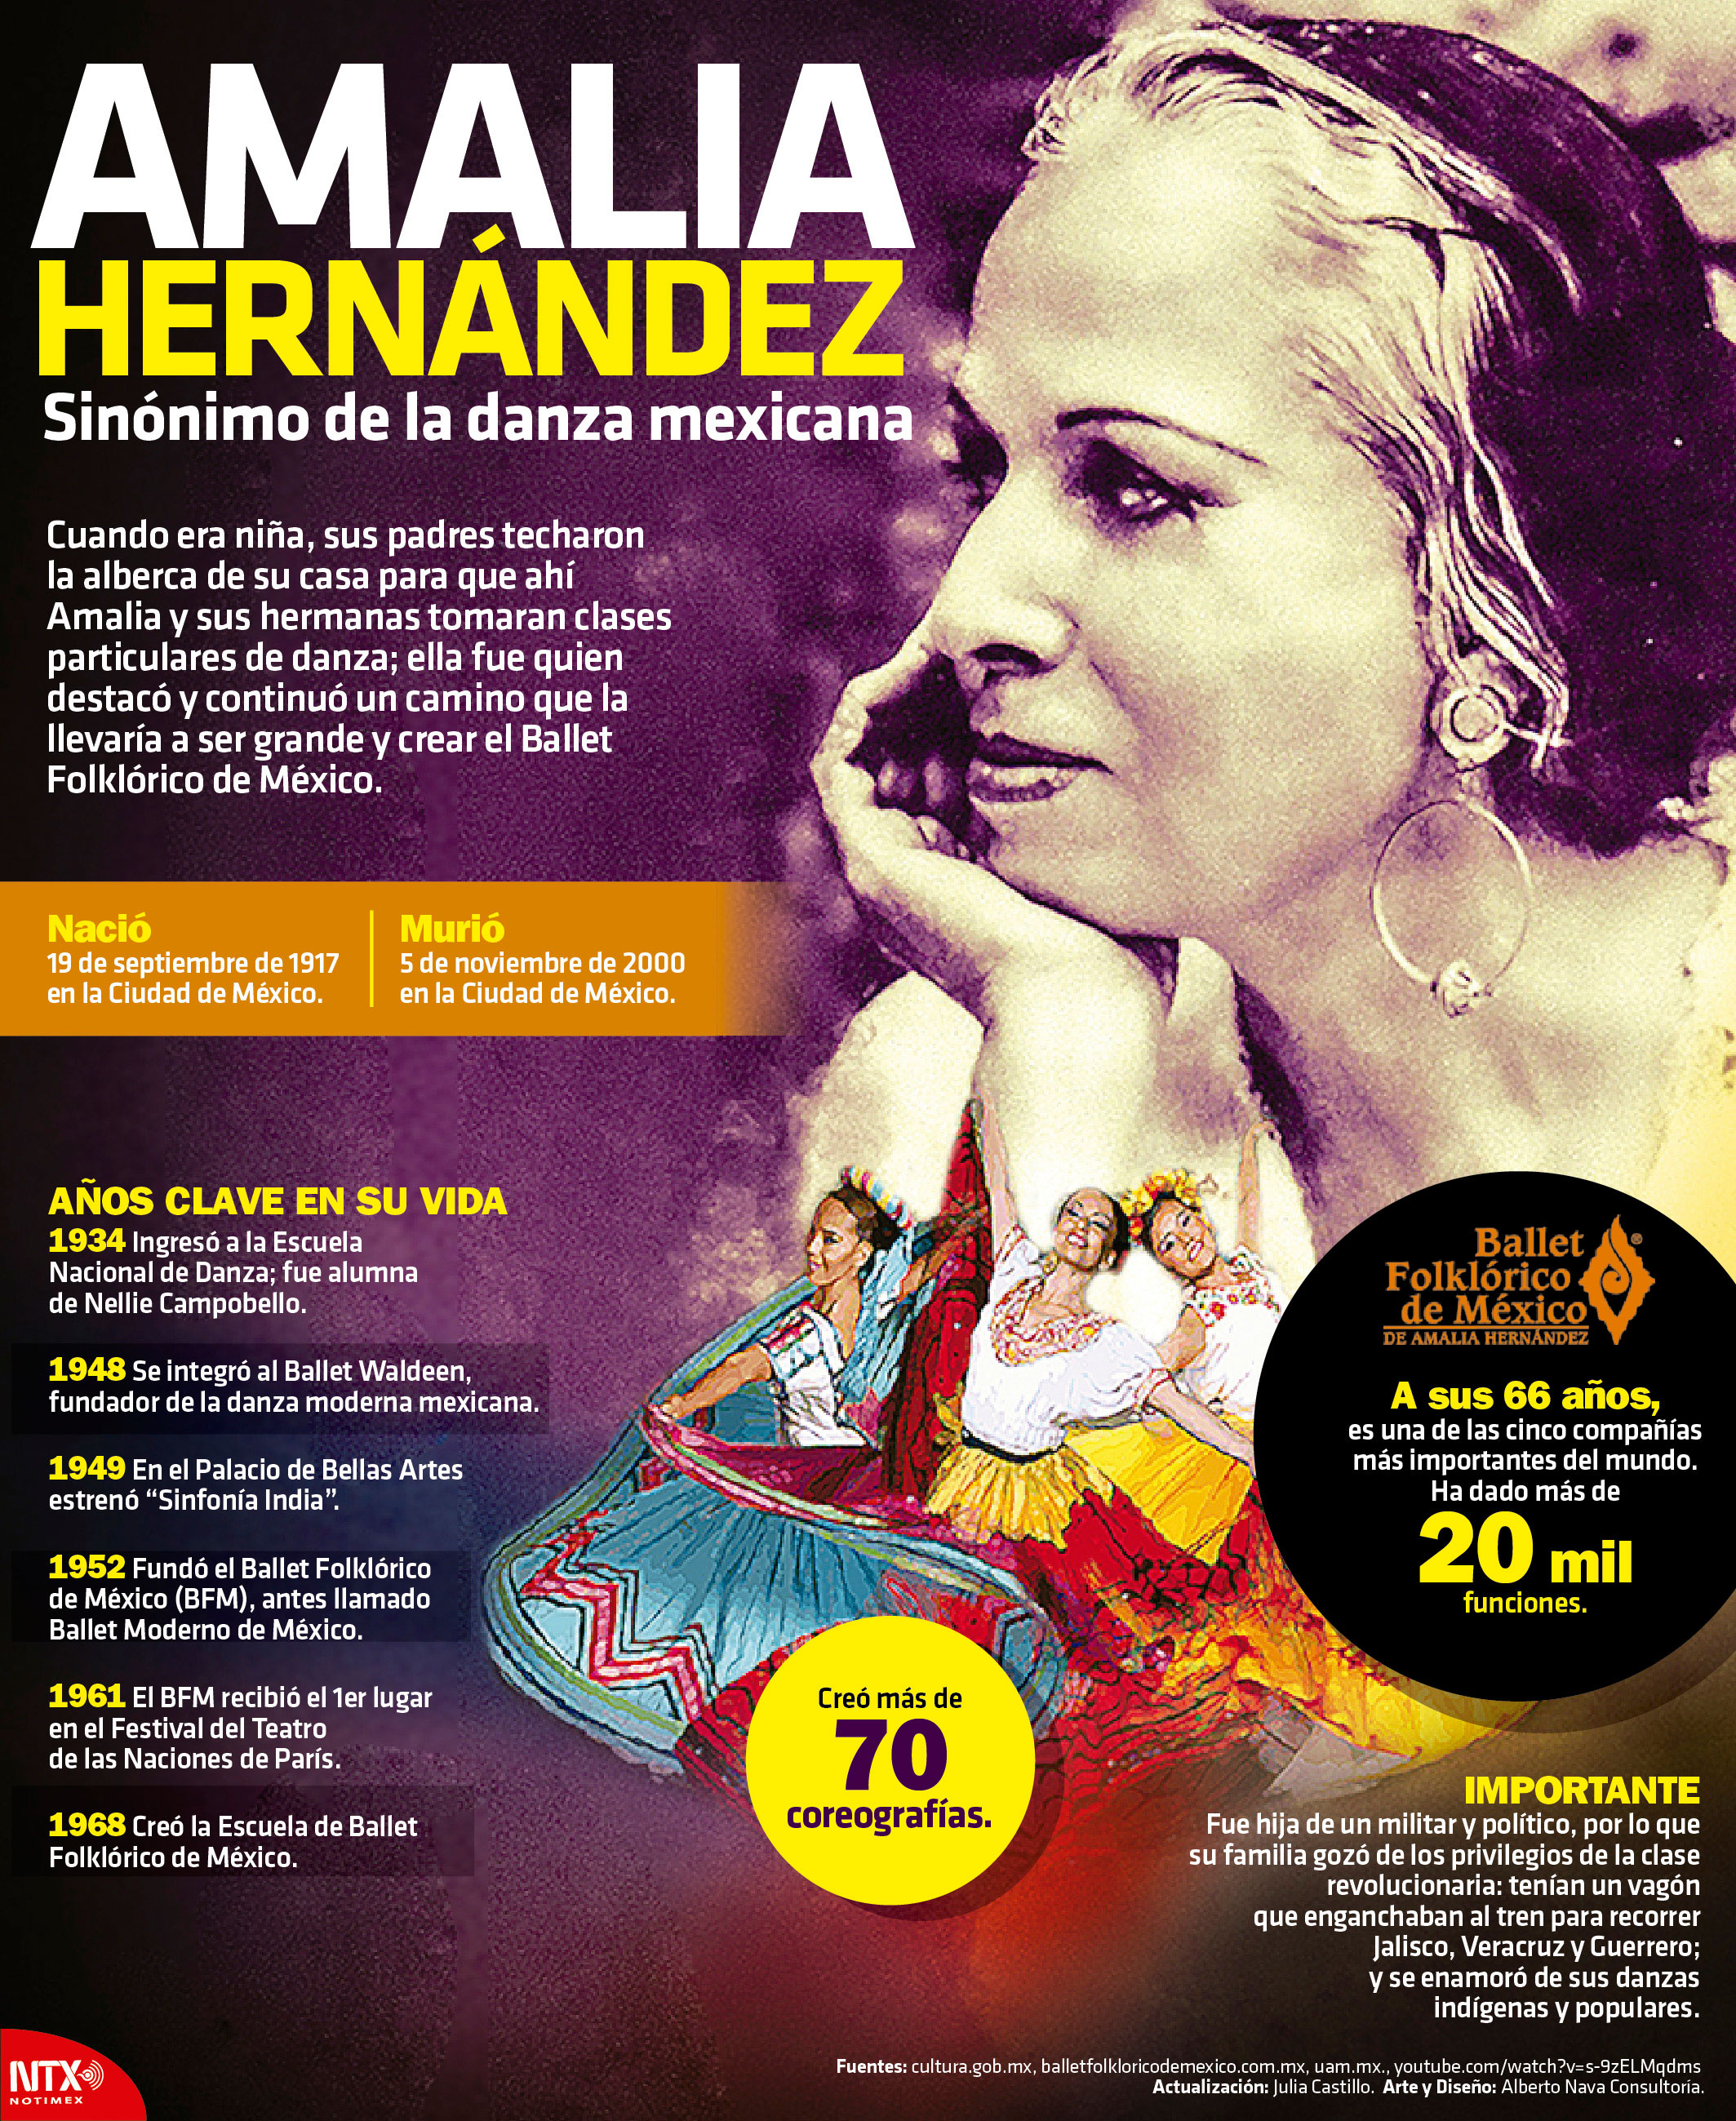 Amalia Hernndez, sinnimo de la danza mexicana